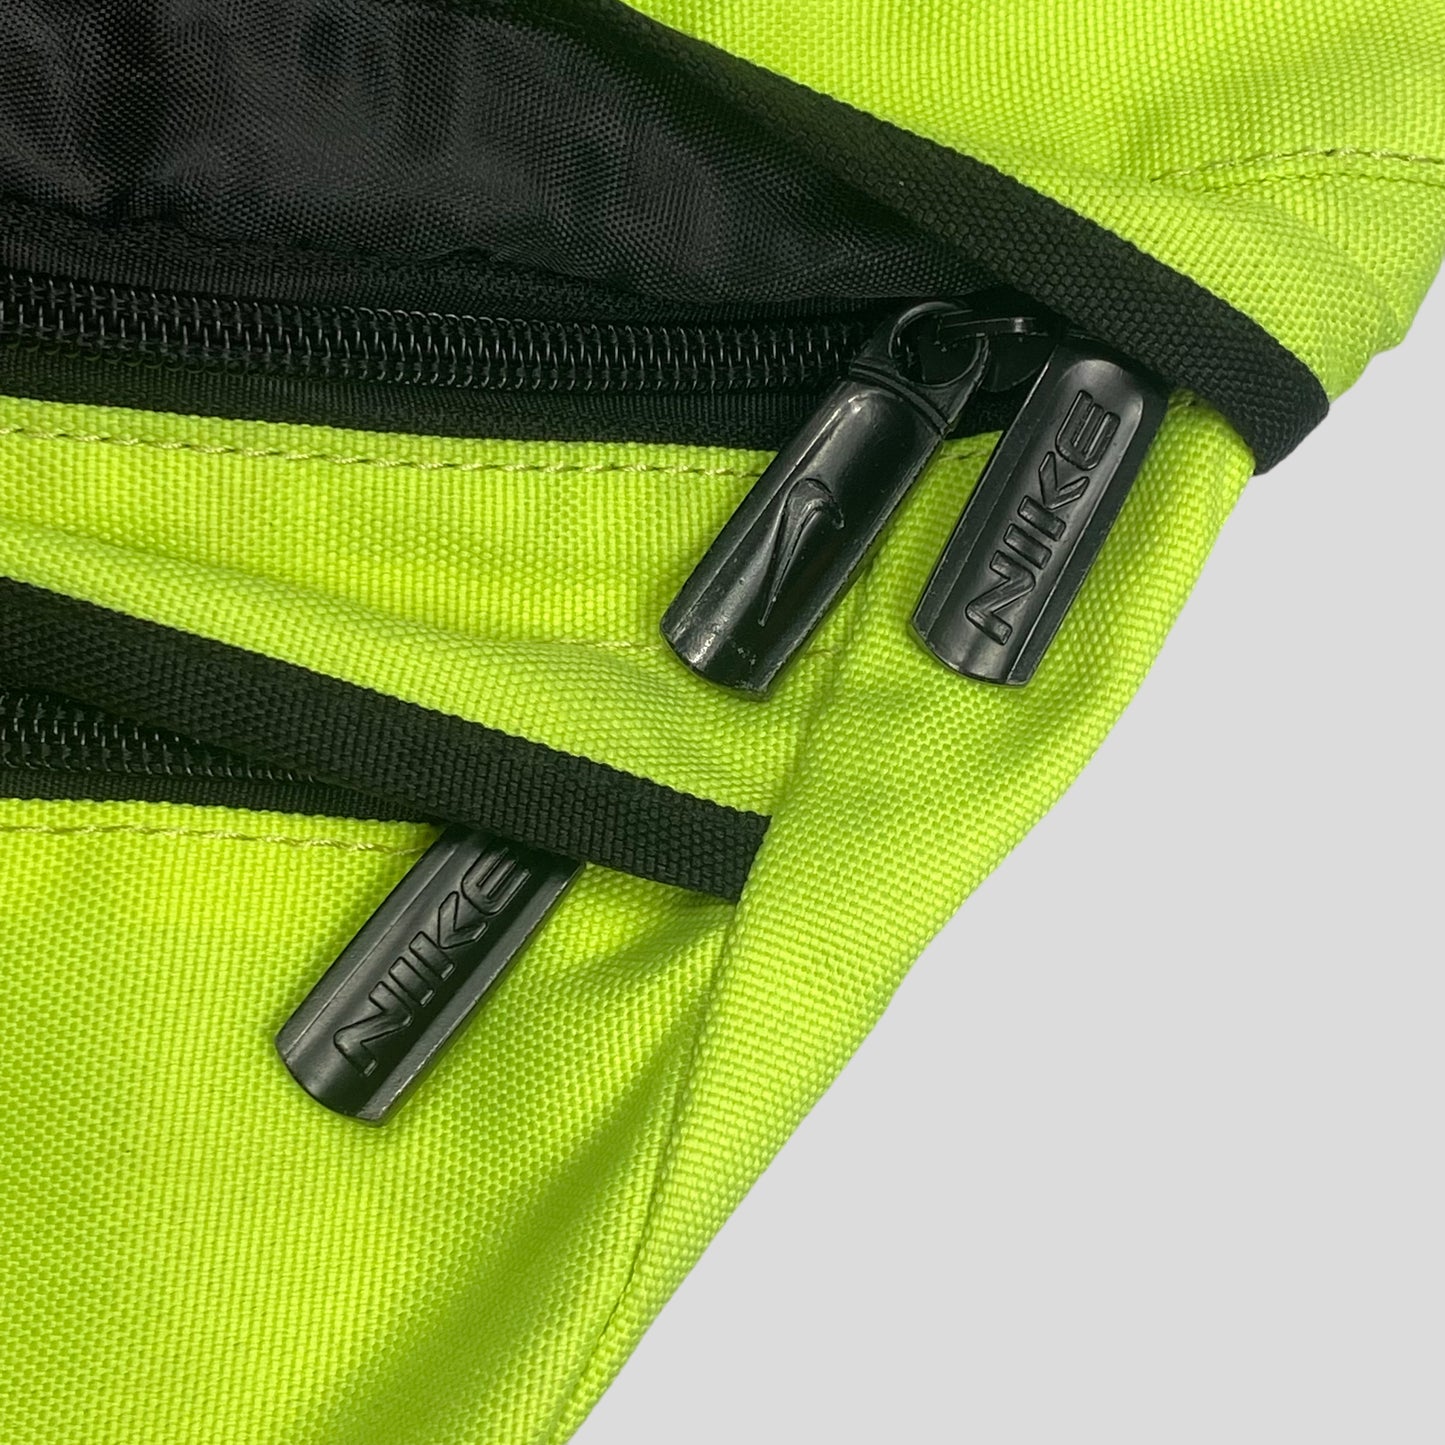 Nike 00’s Neon Tri-Harness Slingbag